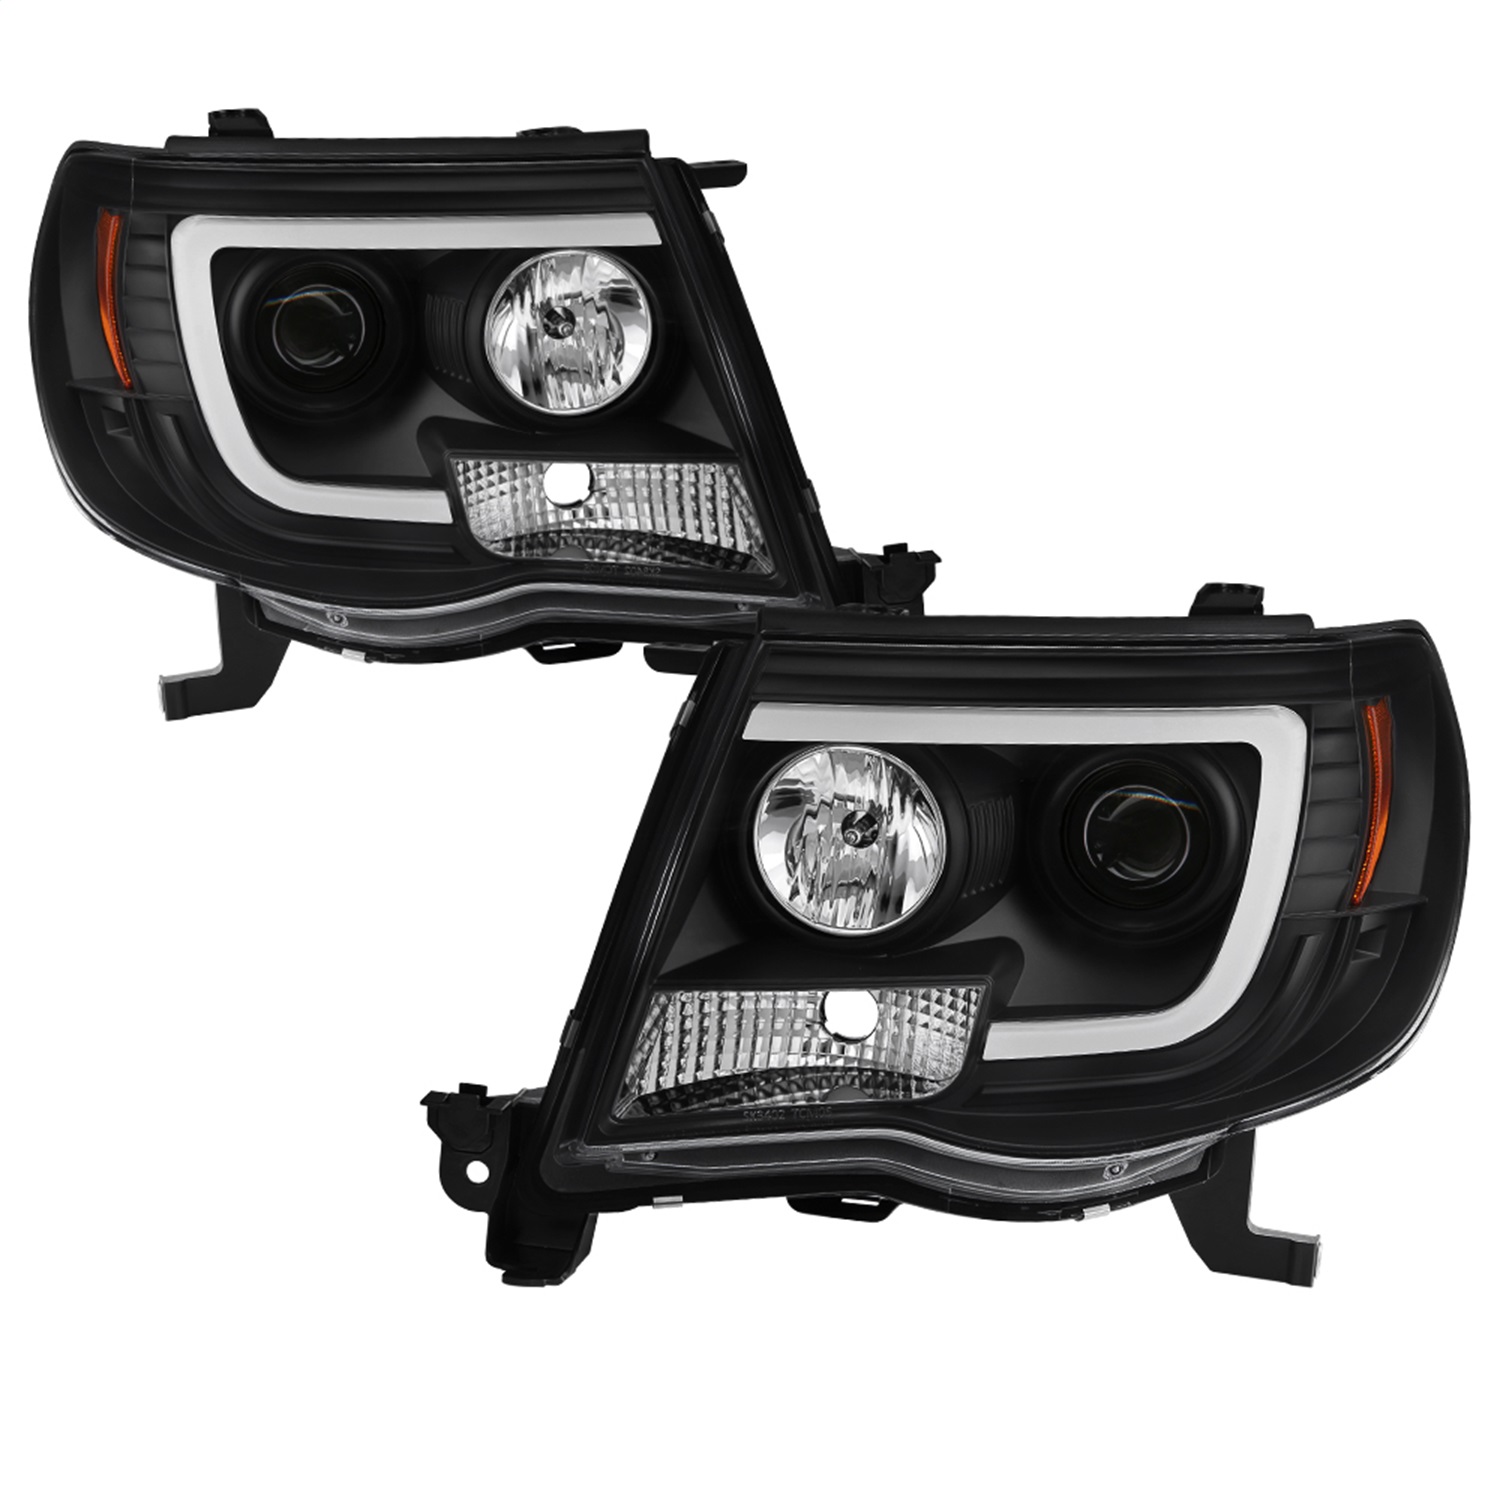 Spyder Auto 5084514 Projector Headlights Fits 05-11 Tacoma